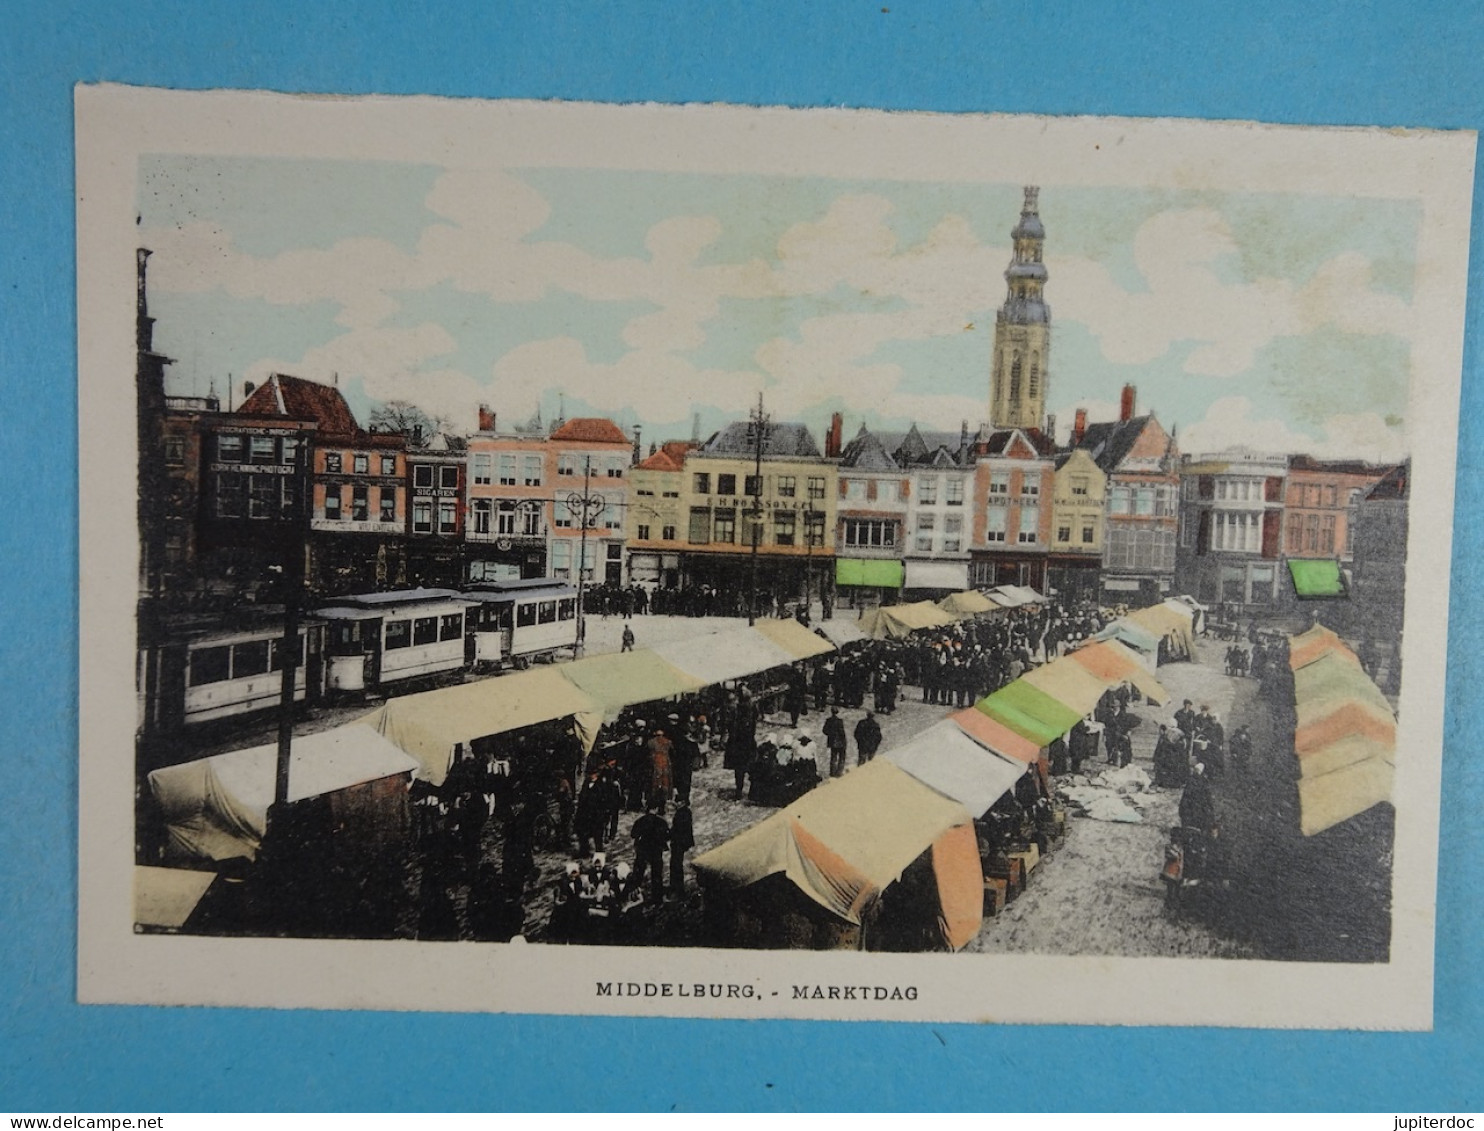 Middelburg Marktdag - Middelburg